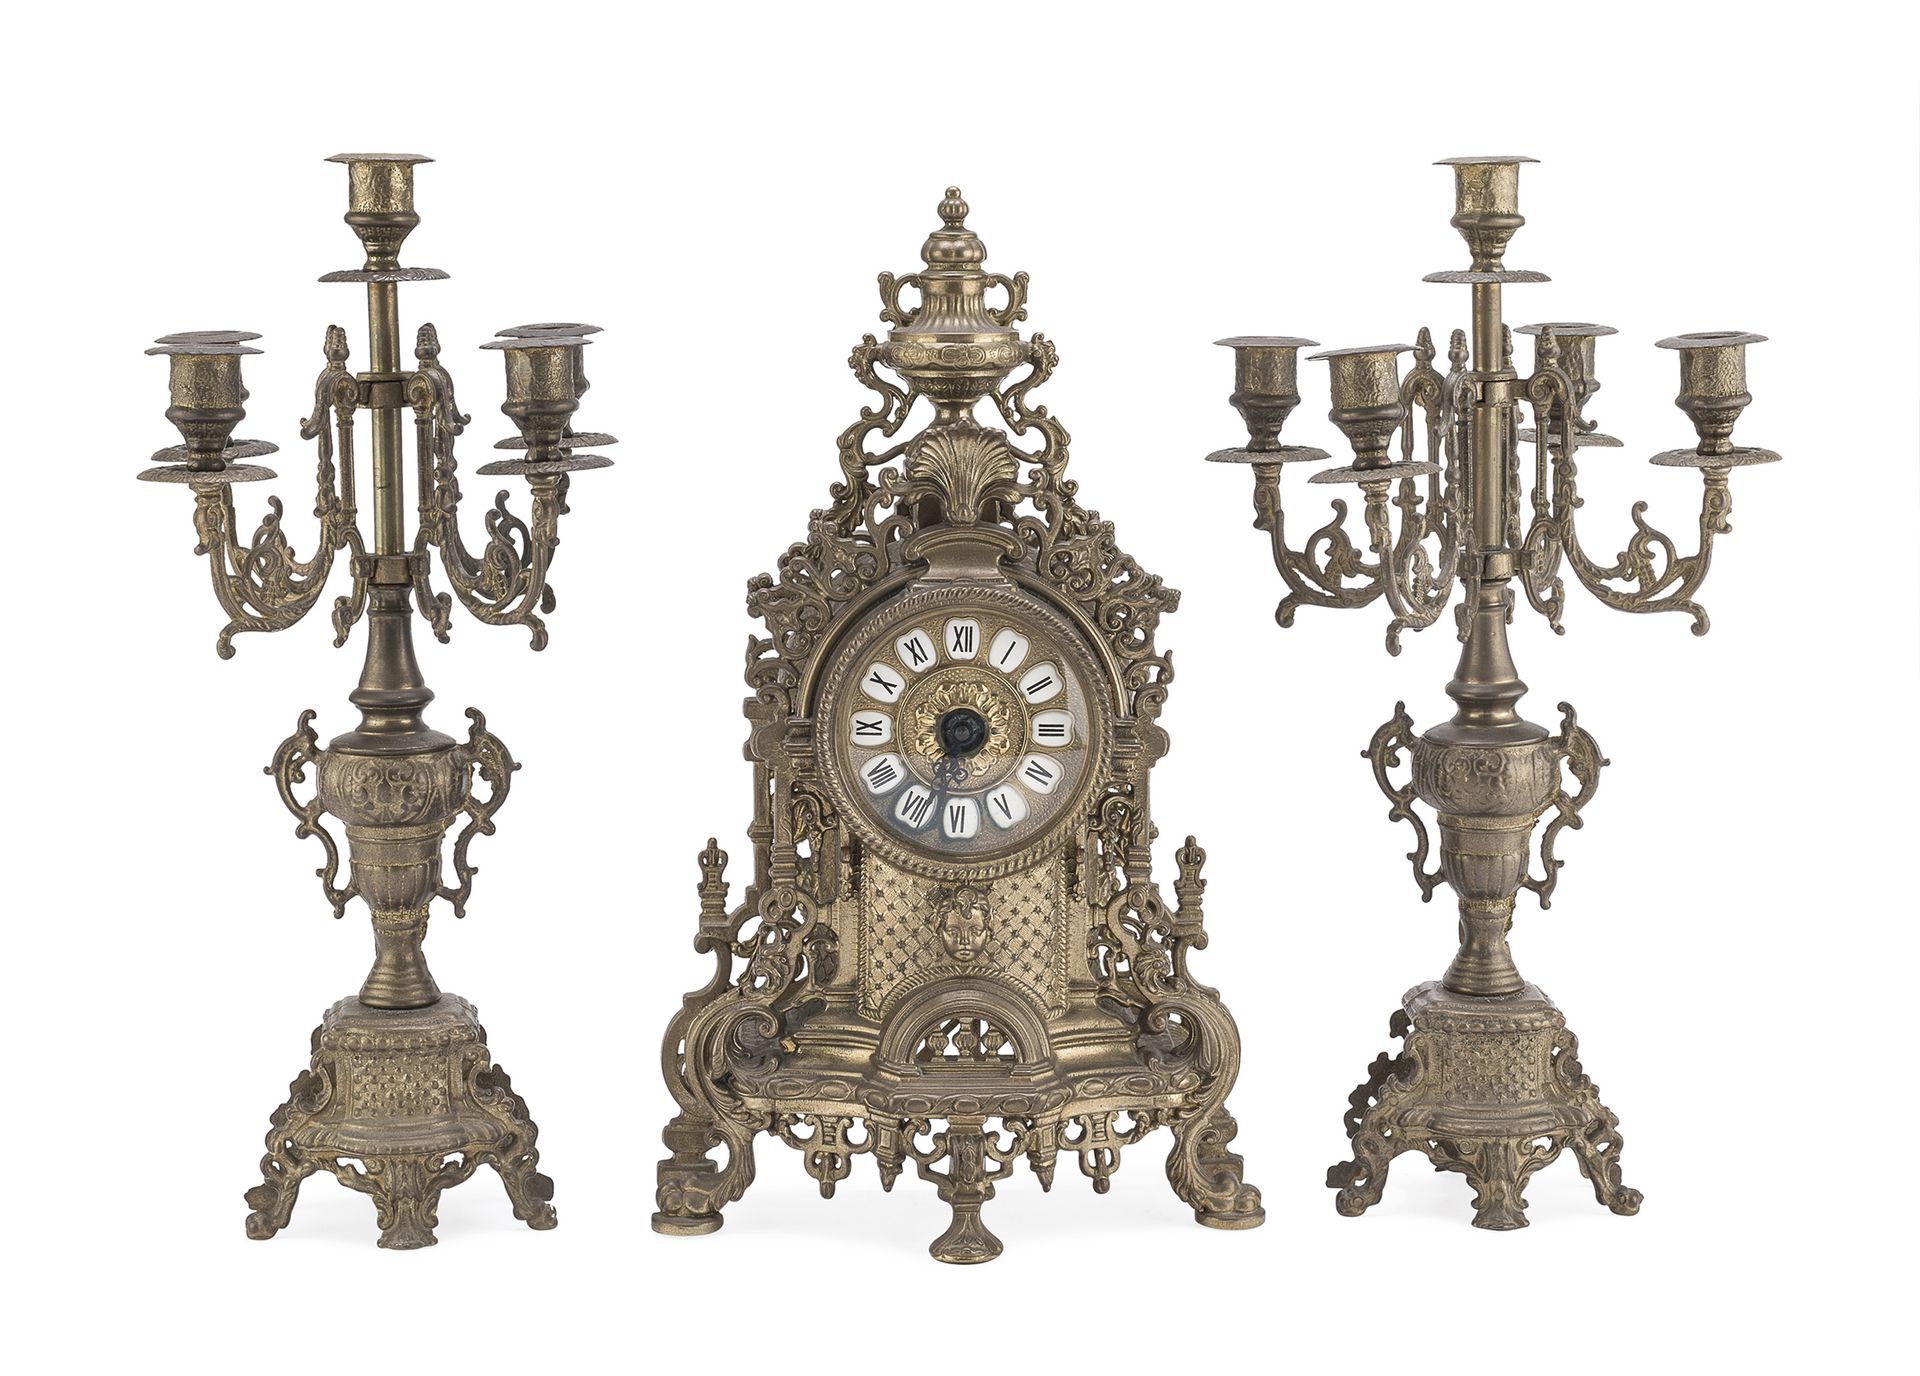 Null 青铜壁炉三联画，19世纪末

钟表上装饰有植物的涡旋，头部和网纹。表盘上有白色珐琅斑块。五臂式烛台。

时钟尺寸为42 x 25 x 14厘米。